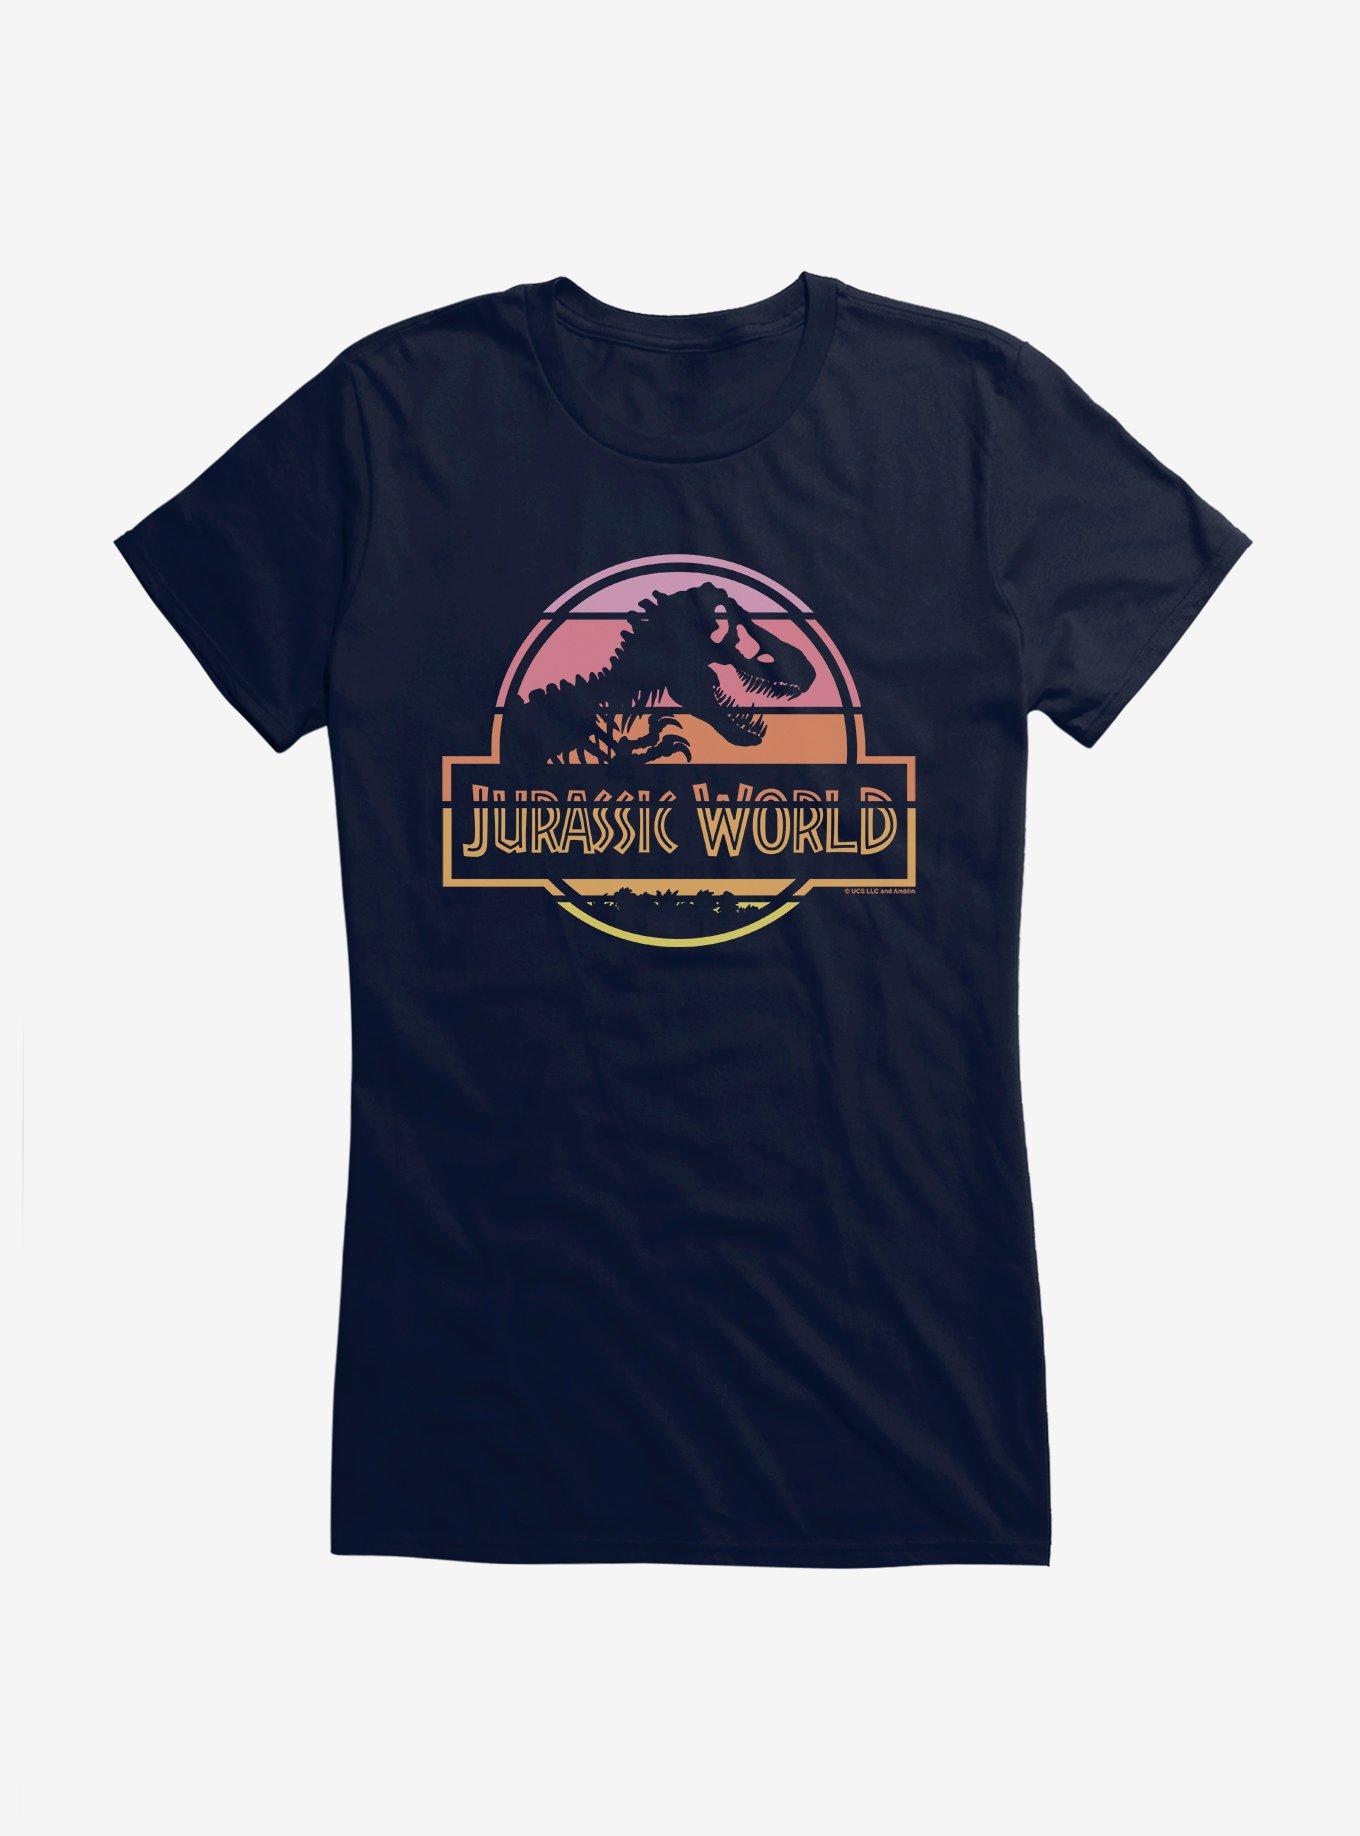 Jurassic World Pastel Sunset Logo Girls T-Shirt, NAVY, hi-res